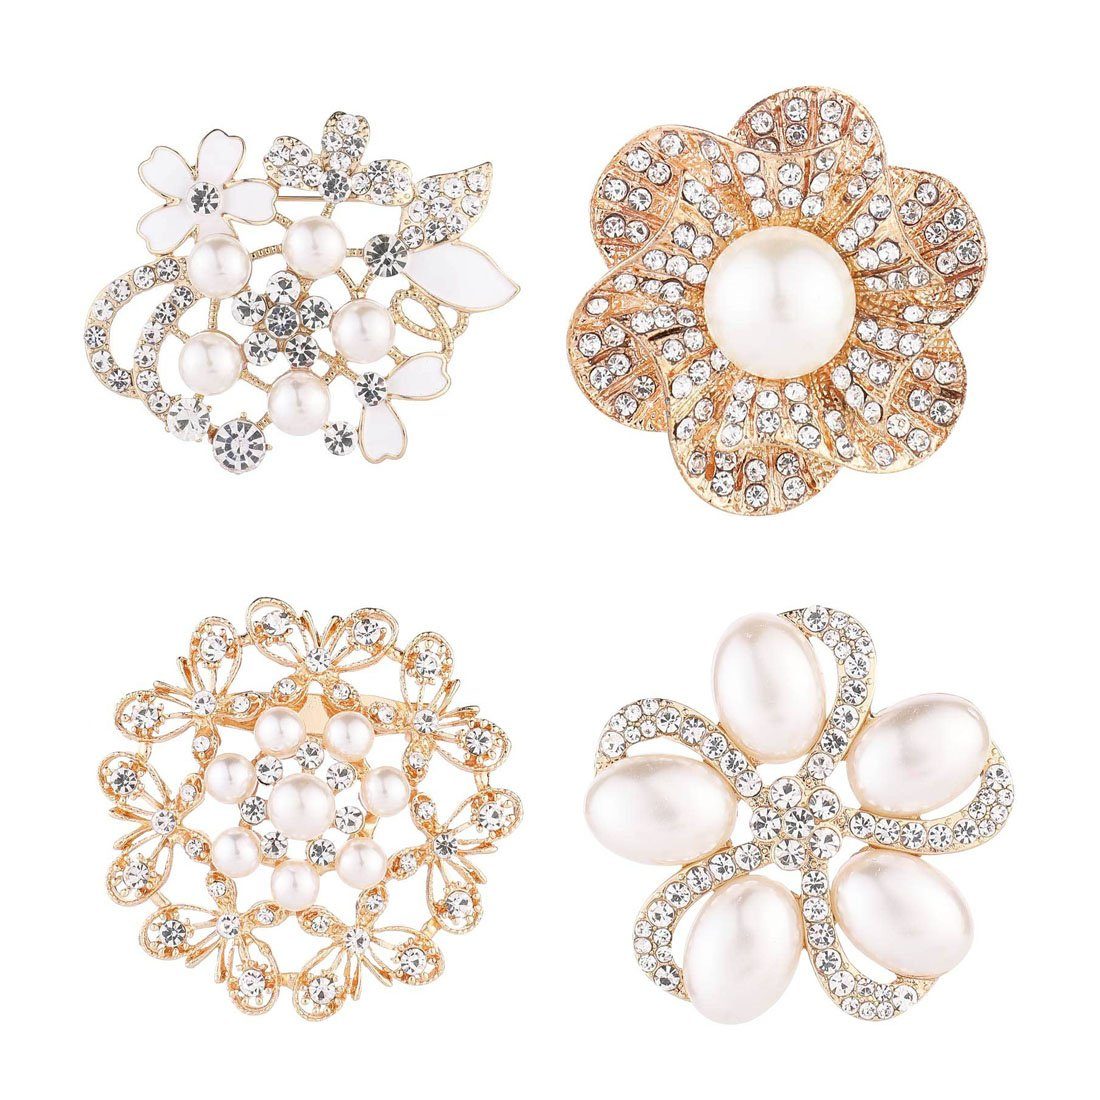 DÖRÖY Broschen Set Damen-Diamant-Perlen-Brosche 4er-Set, Mode-Corsage-Accessoire